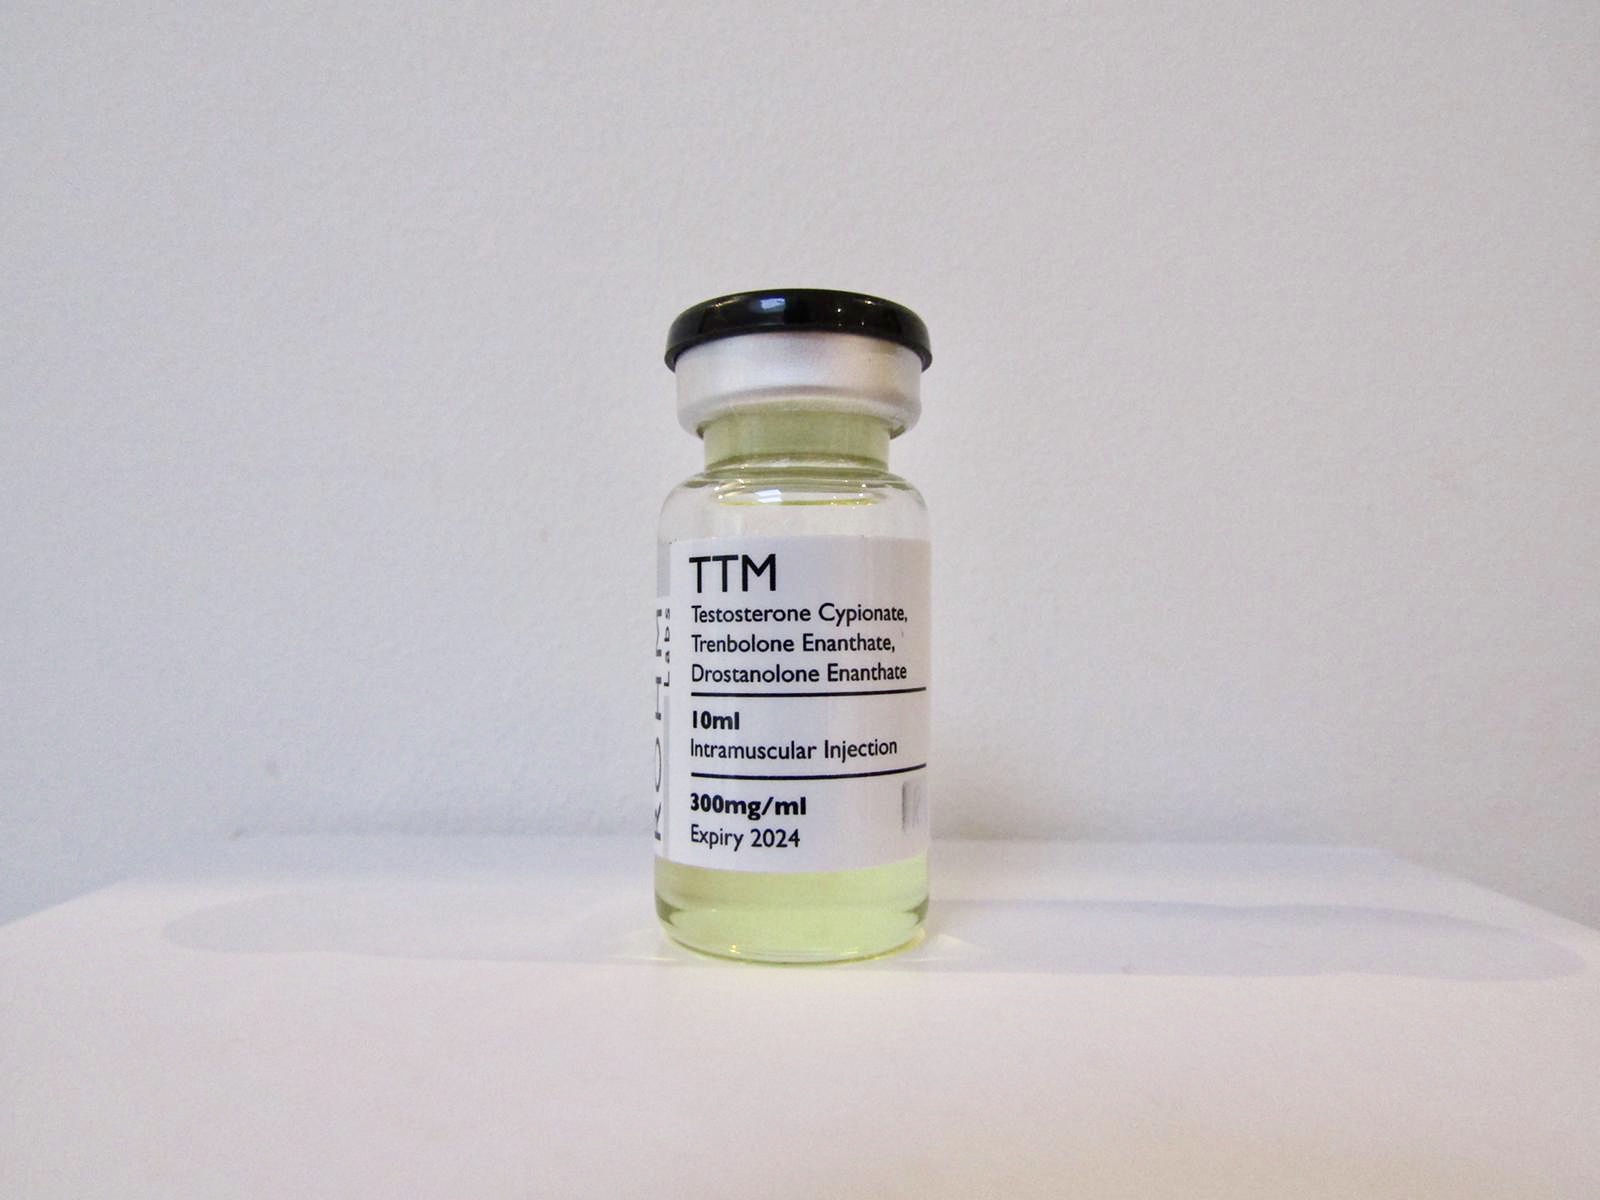 TTM steroid